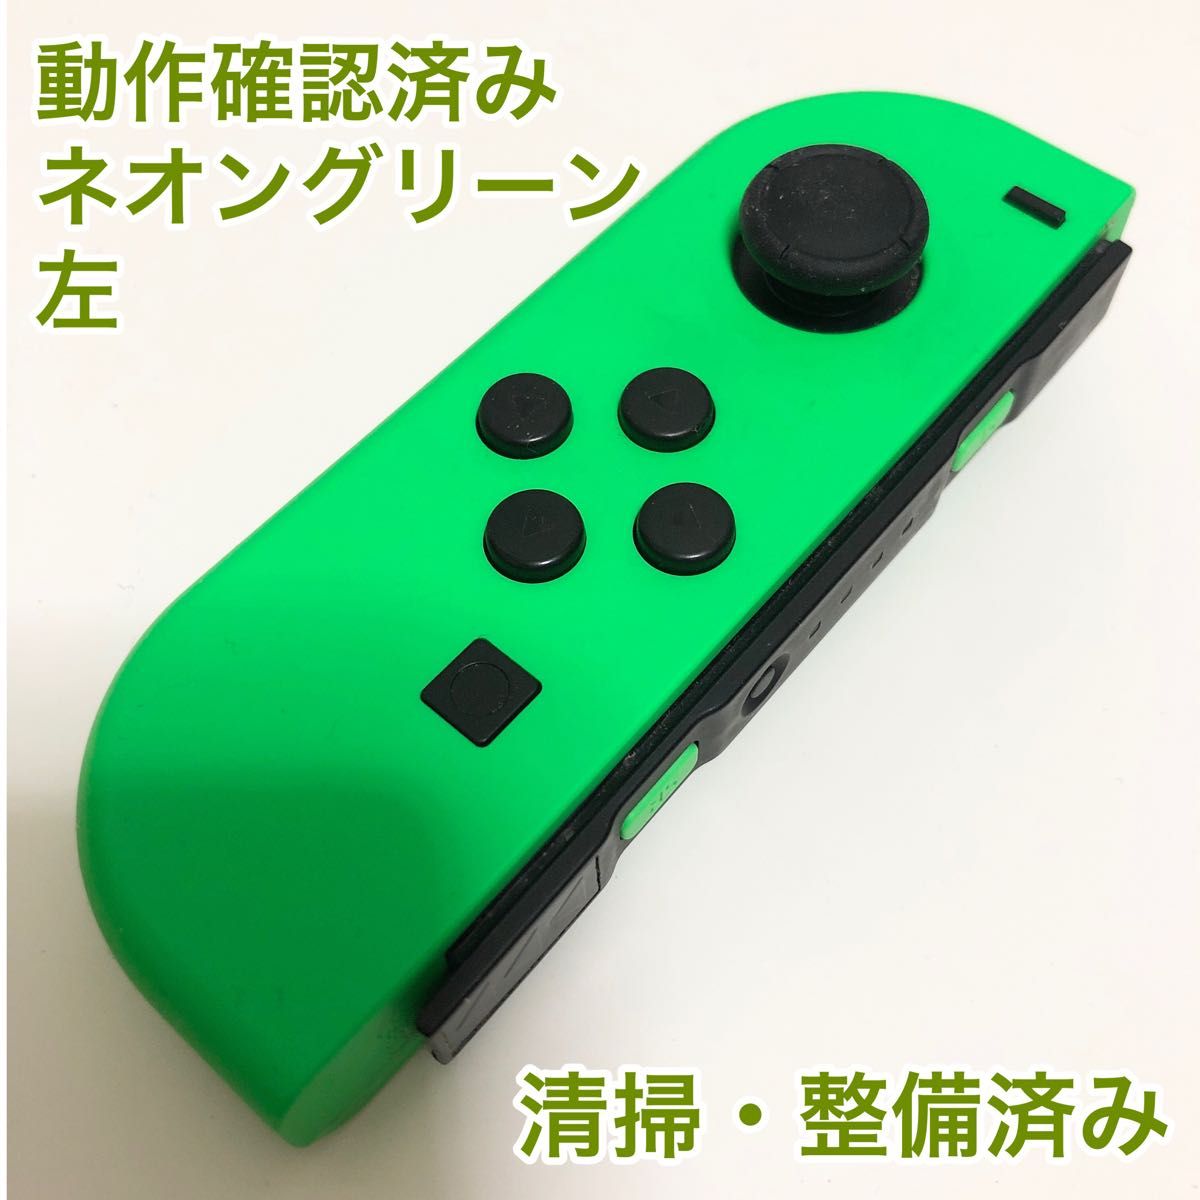 Switch ジョイコン ネオングリーン 左 L ニンテンドー 1-D974